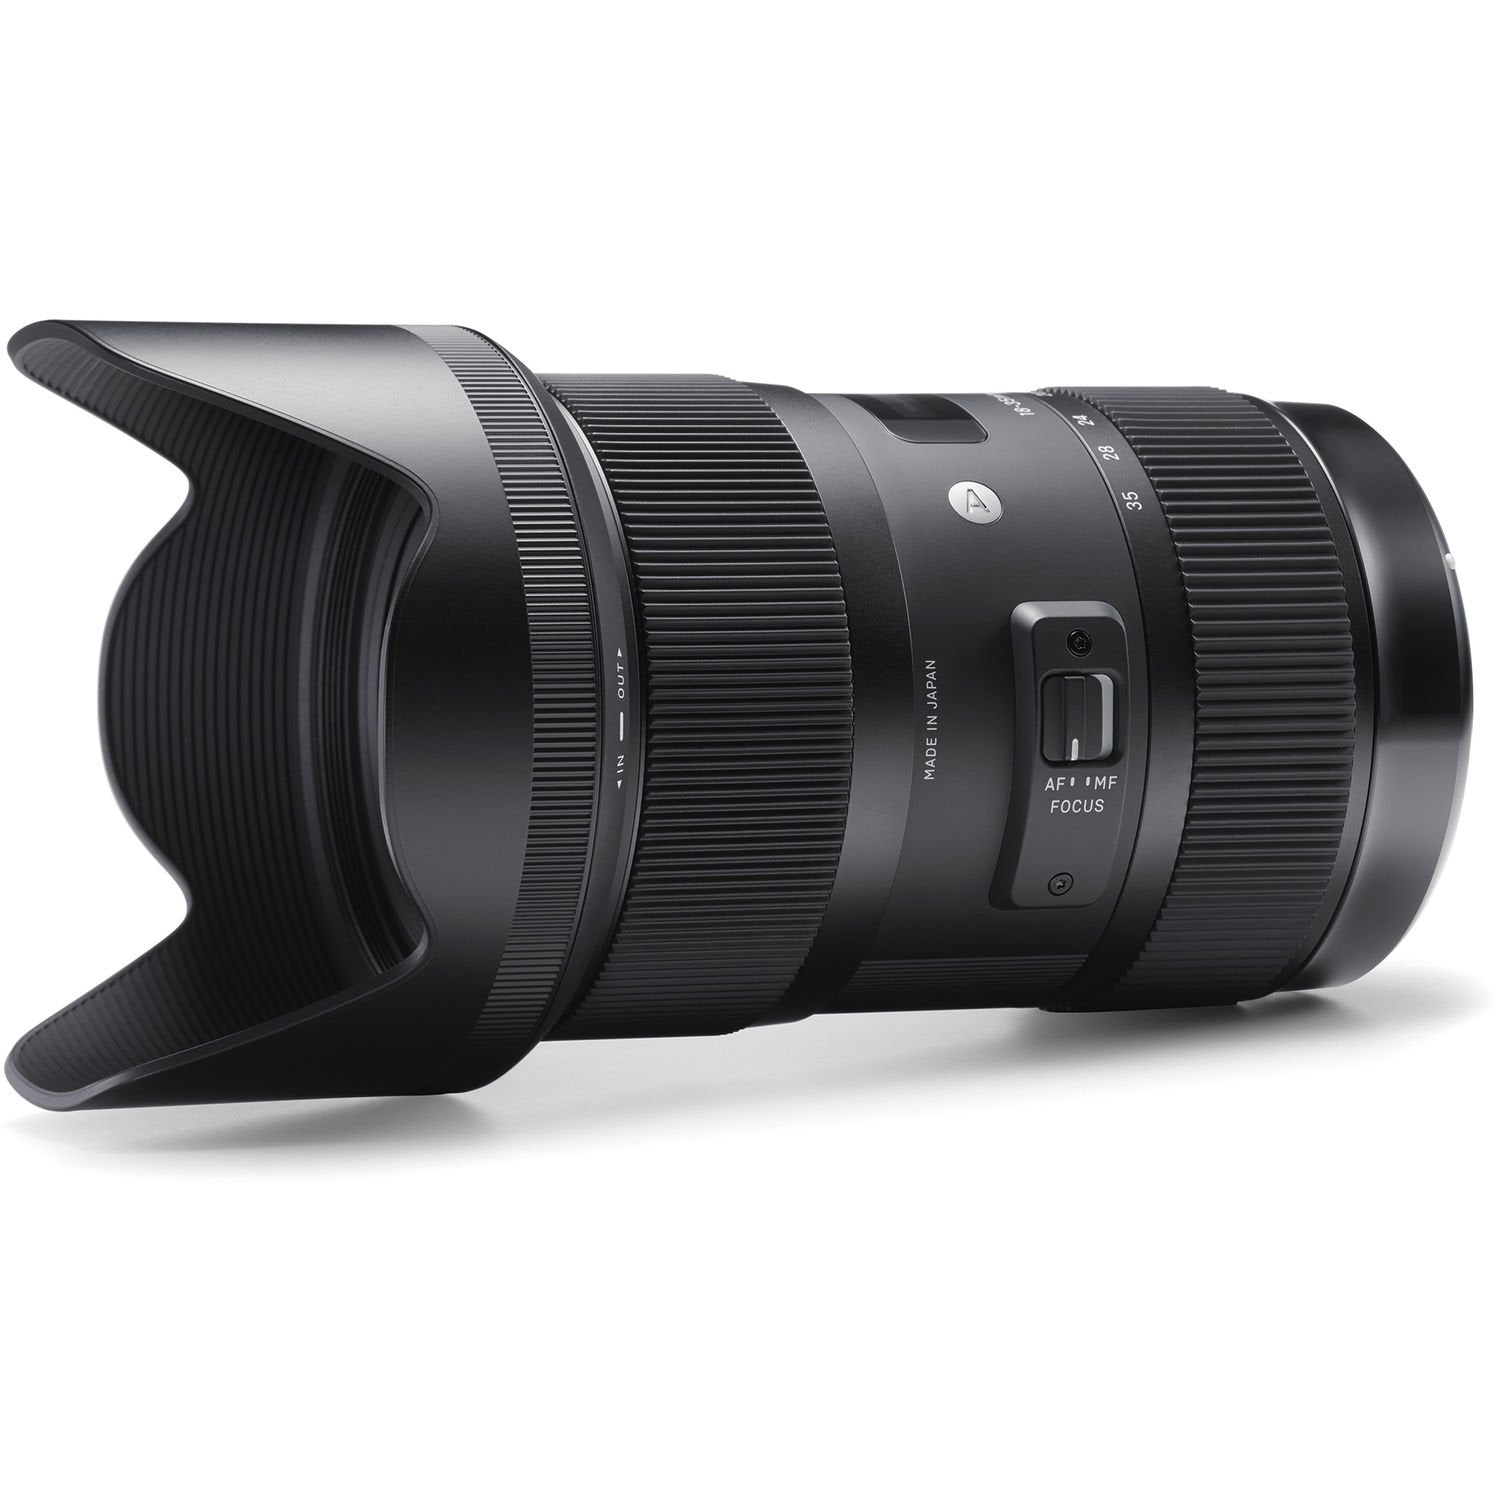 Sigma 18-35mm f/1.8 DC HSM Art Lens for Canon # 210-101 + 72mm 3 Piece Filter Kit + Lens Pen Cleaner + 70in Monopod Bundle